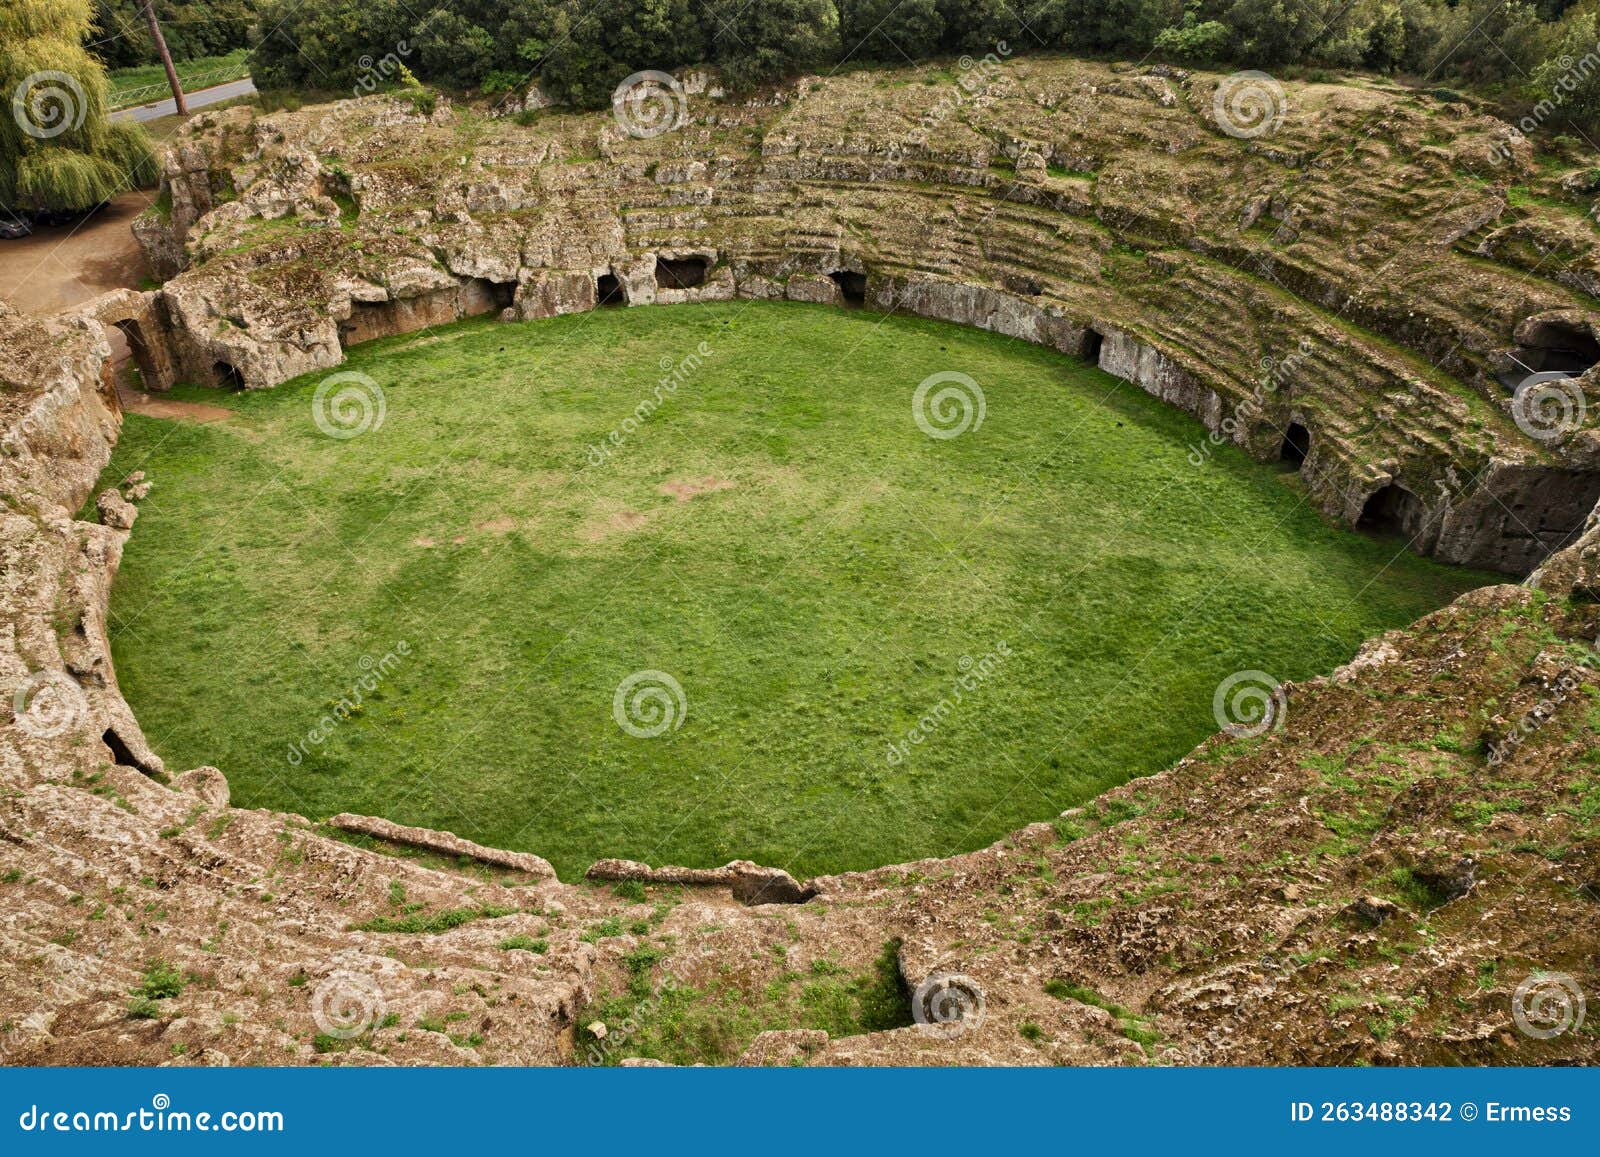 sutri, viterbo, lazio, italy: the roman amphitheater, dug in the tufa rock 2000 years ago